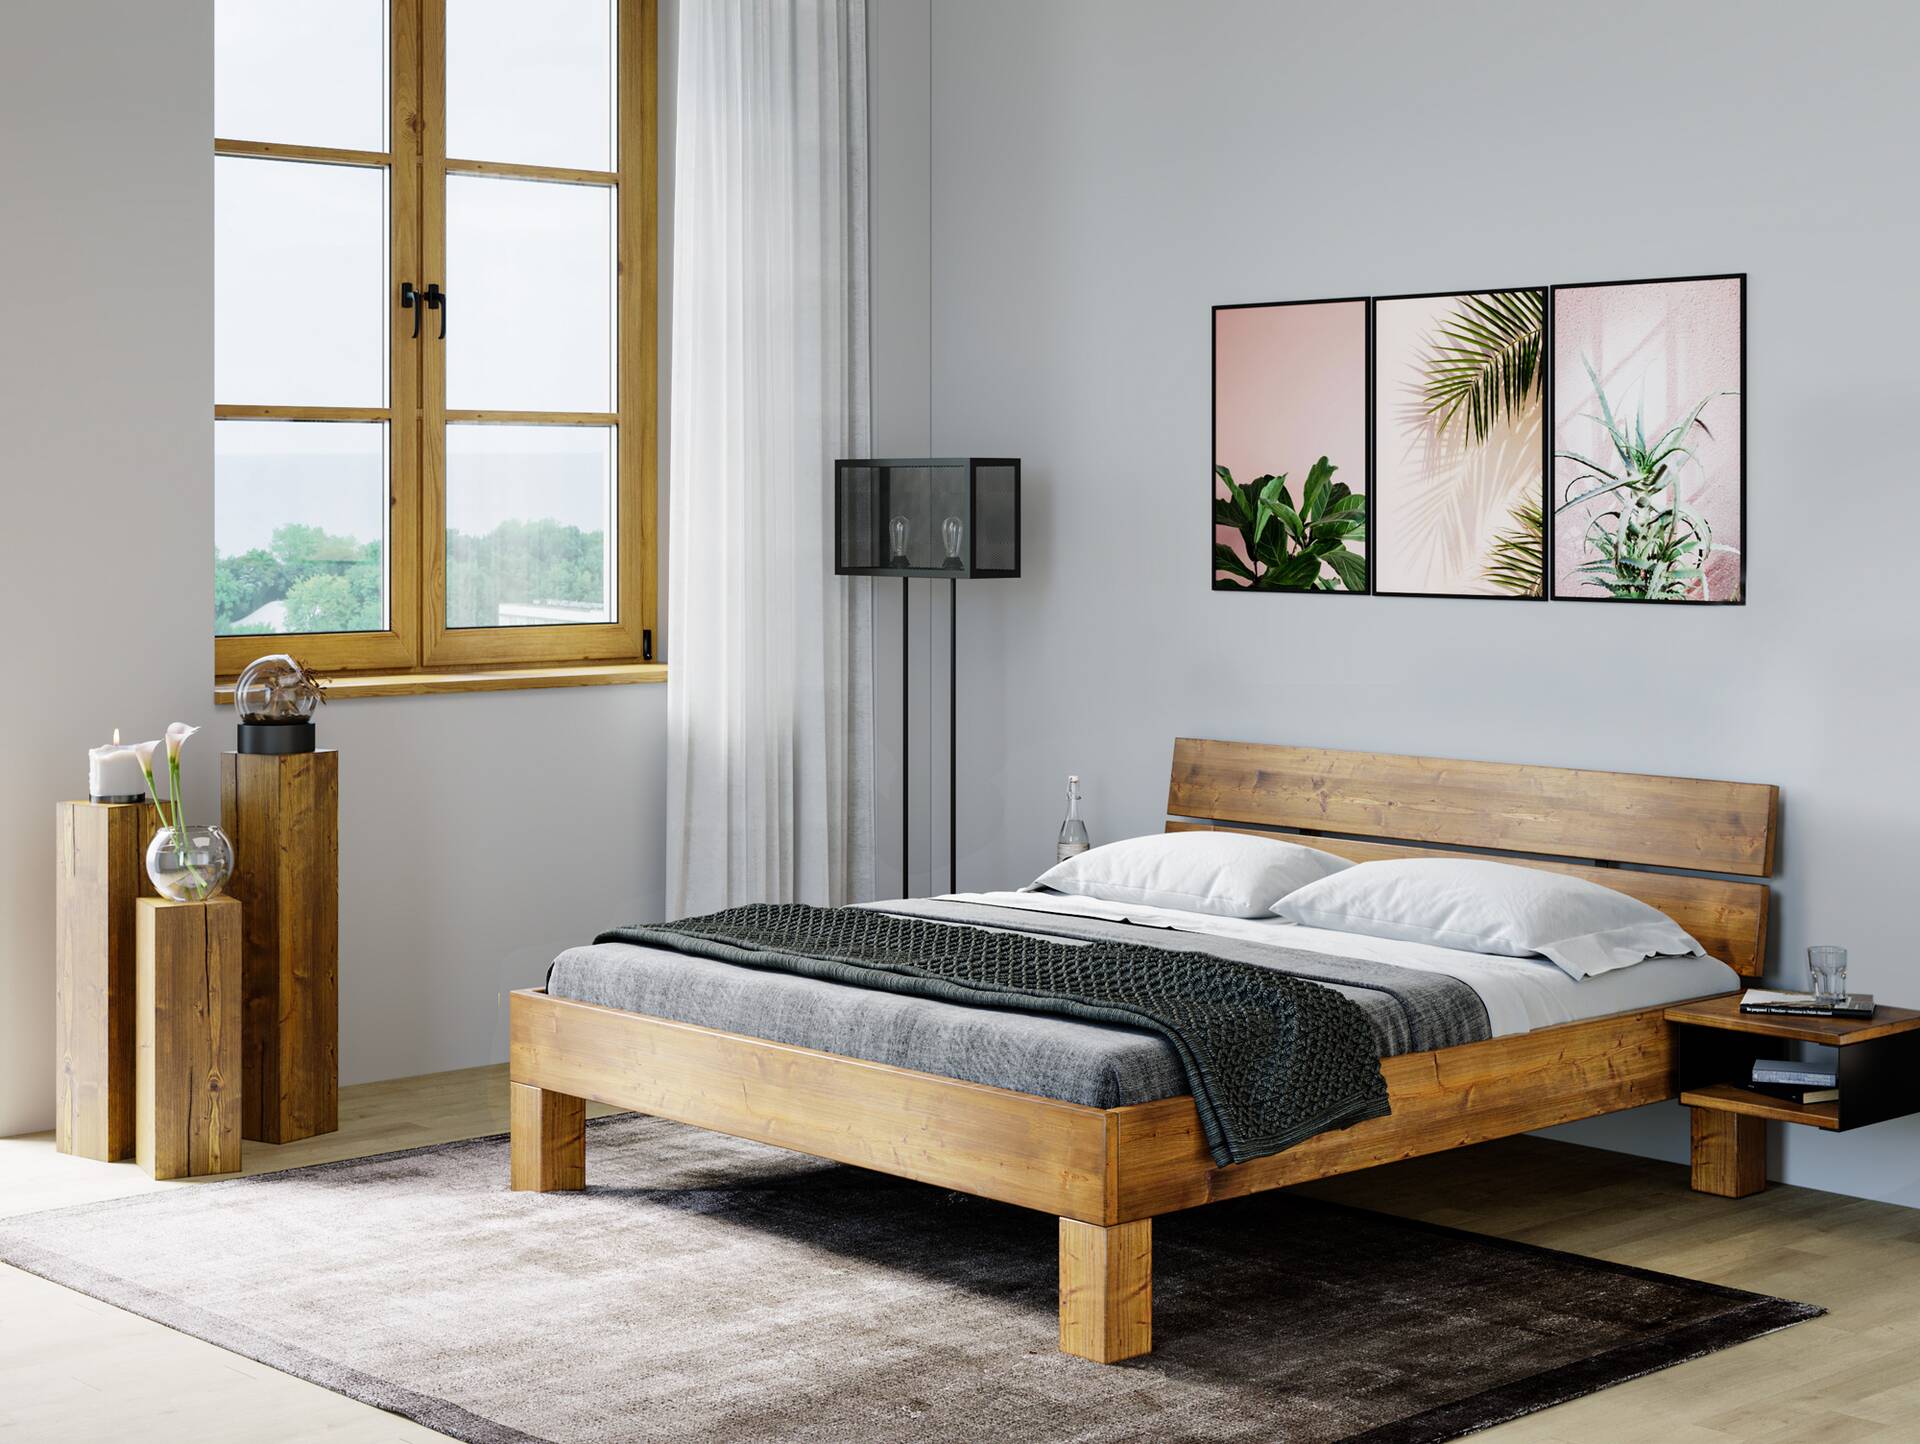 CURBY 4-Fuß-Bett mit Kopfteil, Material Massivholz, rustikale Altholzoptik, Fichte 90 x 200 cm | vintage | Standardhöhe